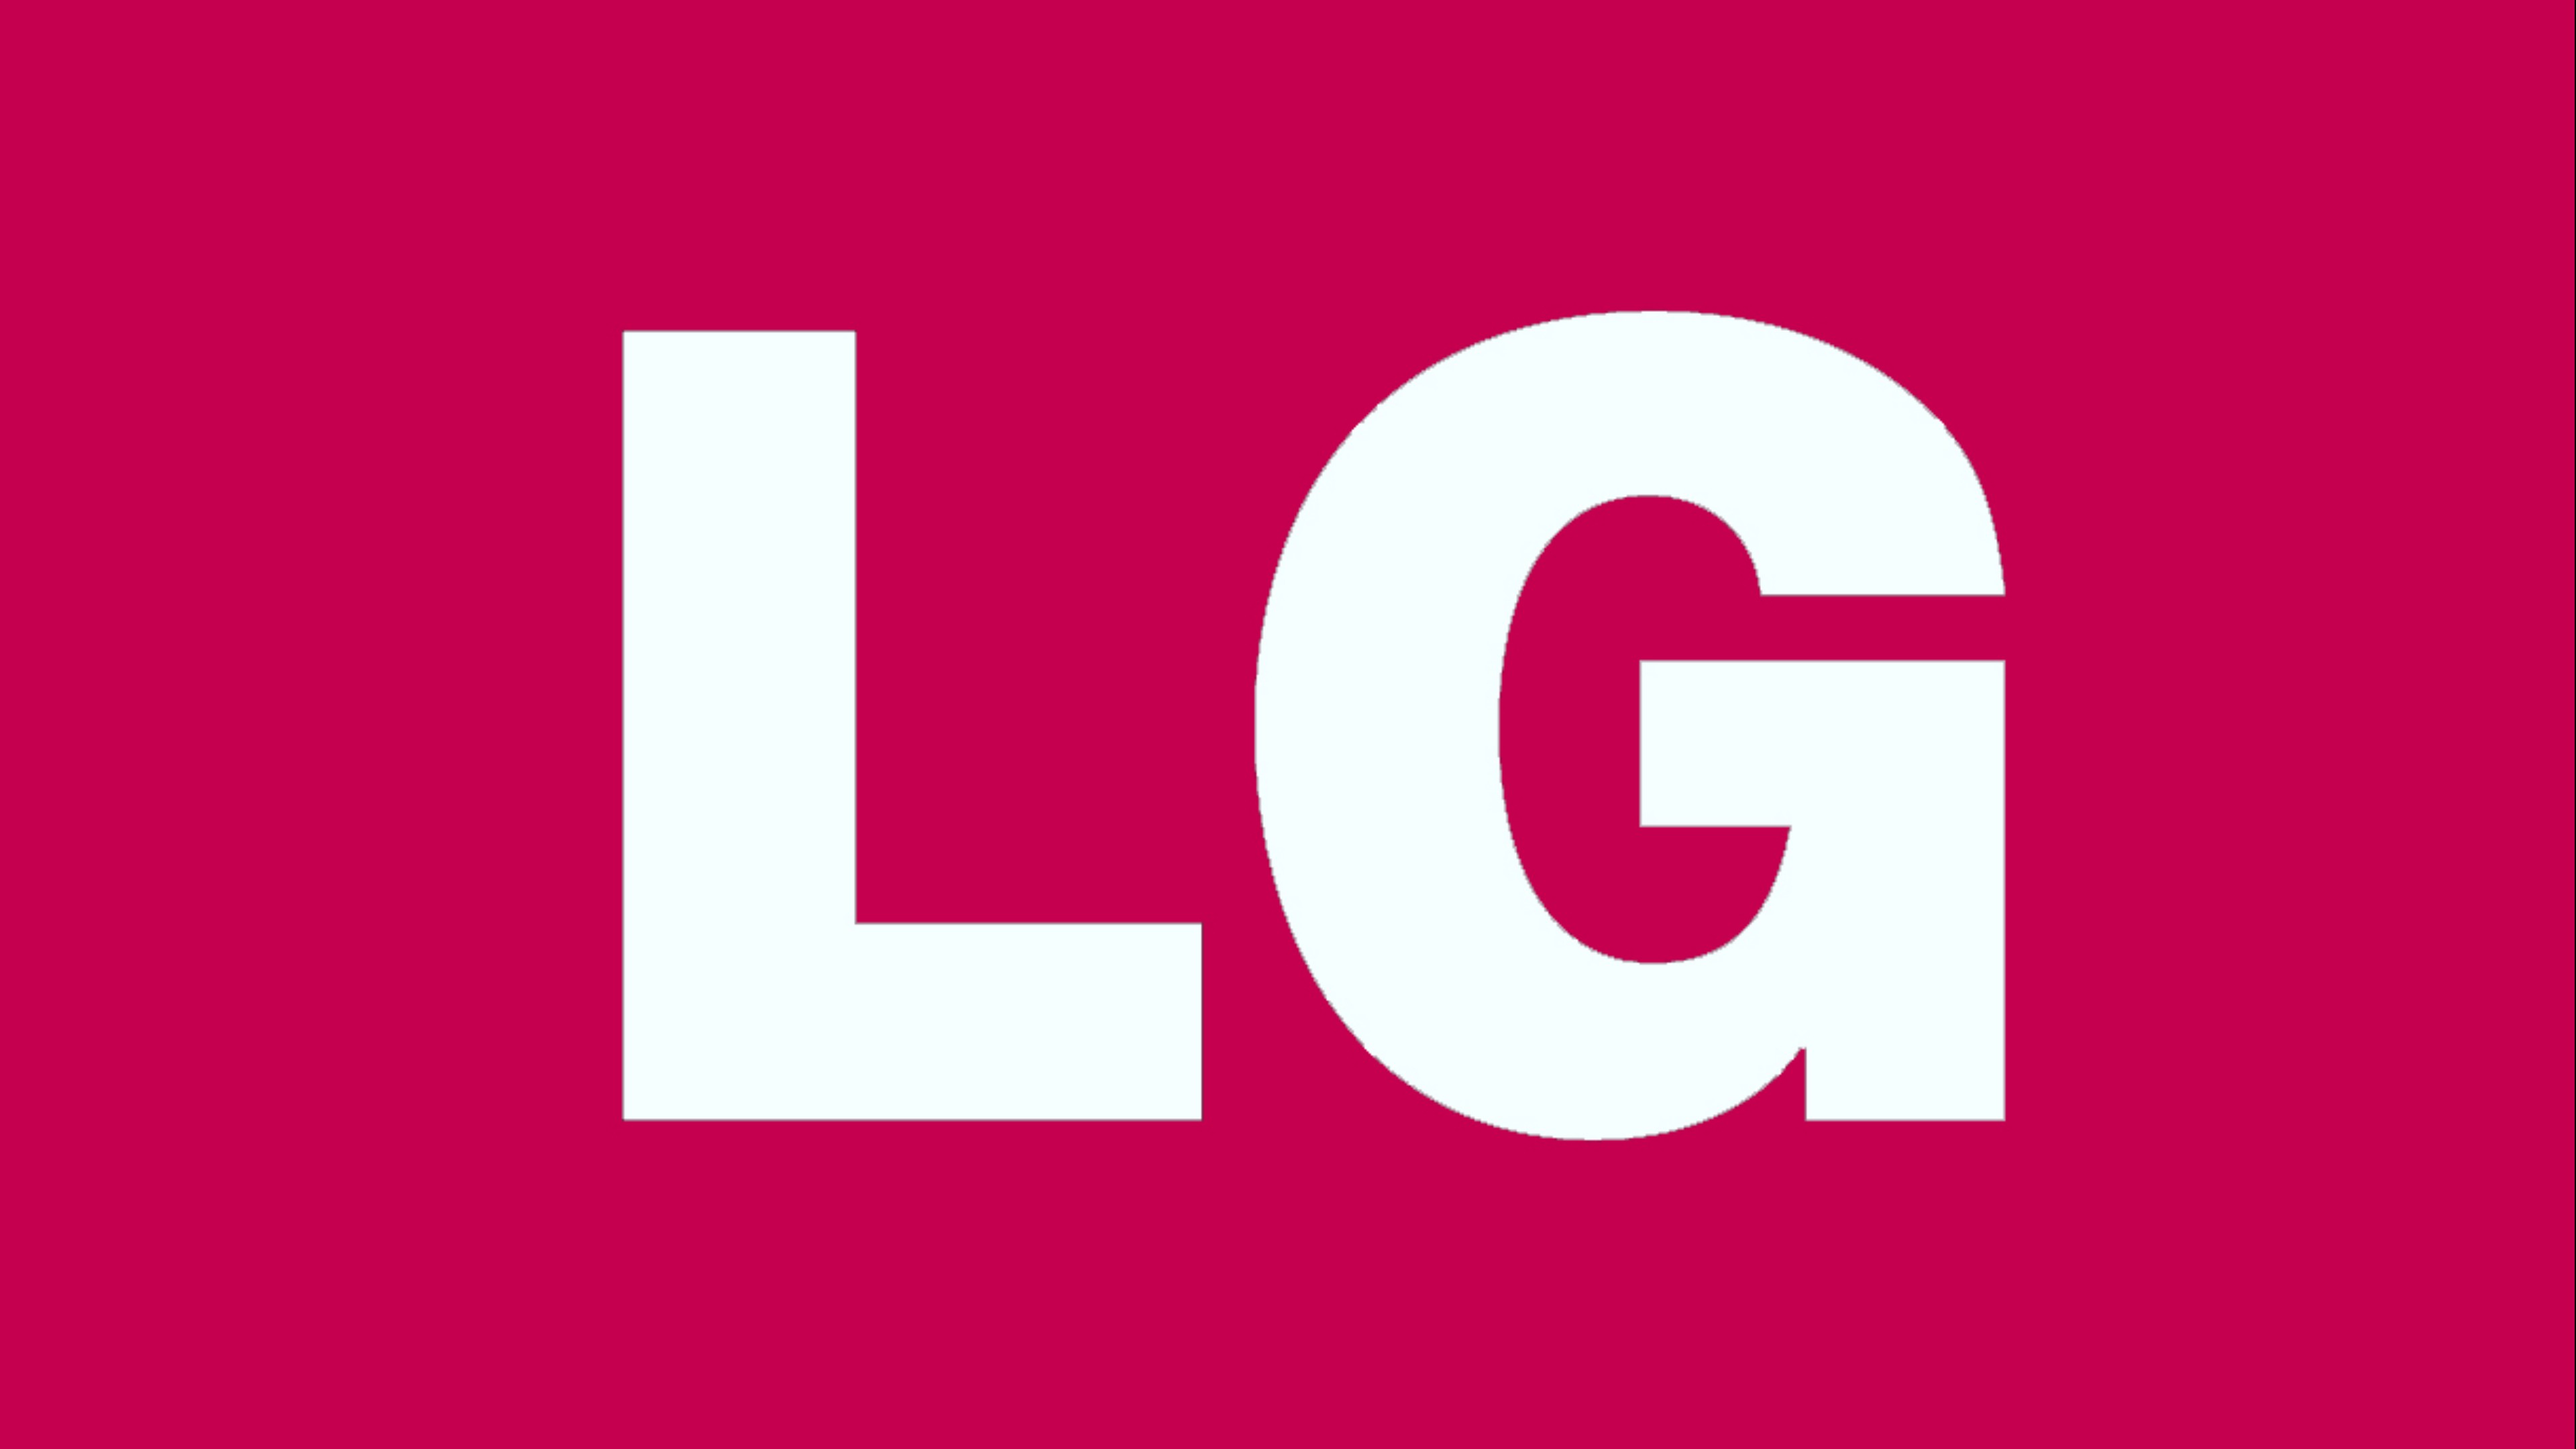 Lg телевизоры логотип. LG эмблема. Логотип компании LG. Картинки LG. ТВ В LG логотип.